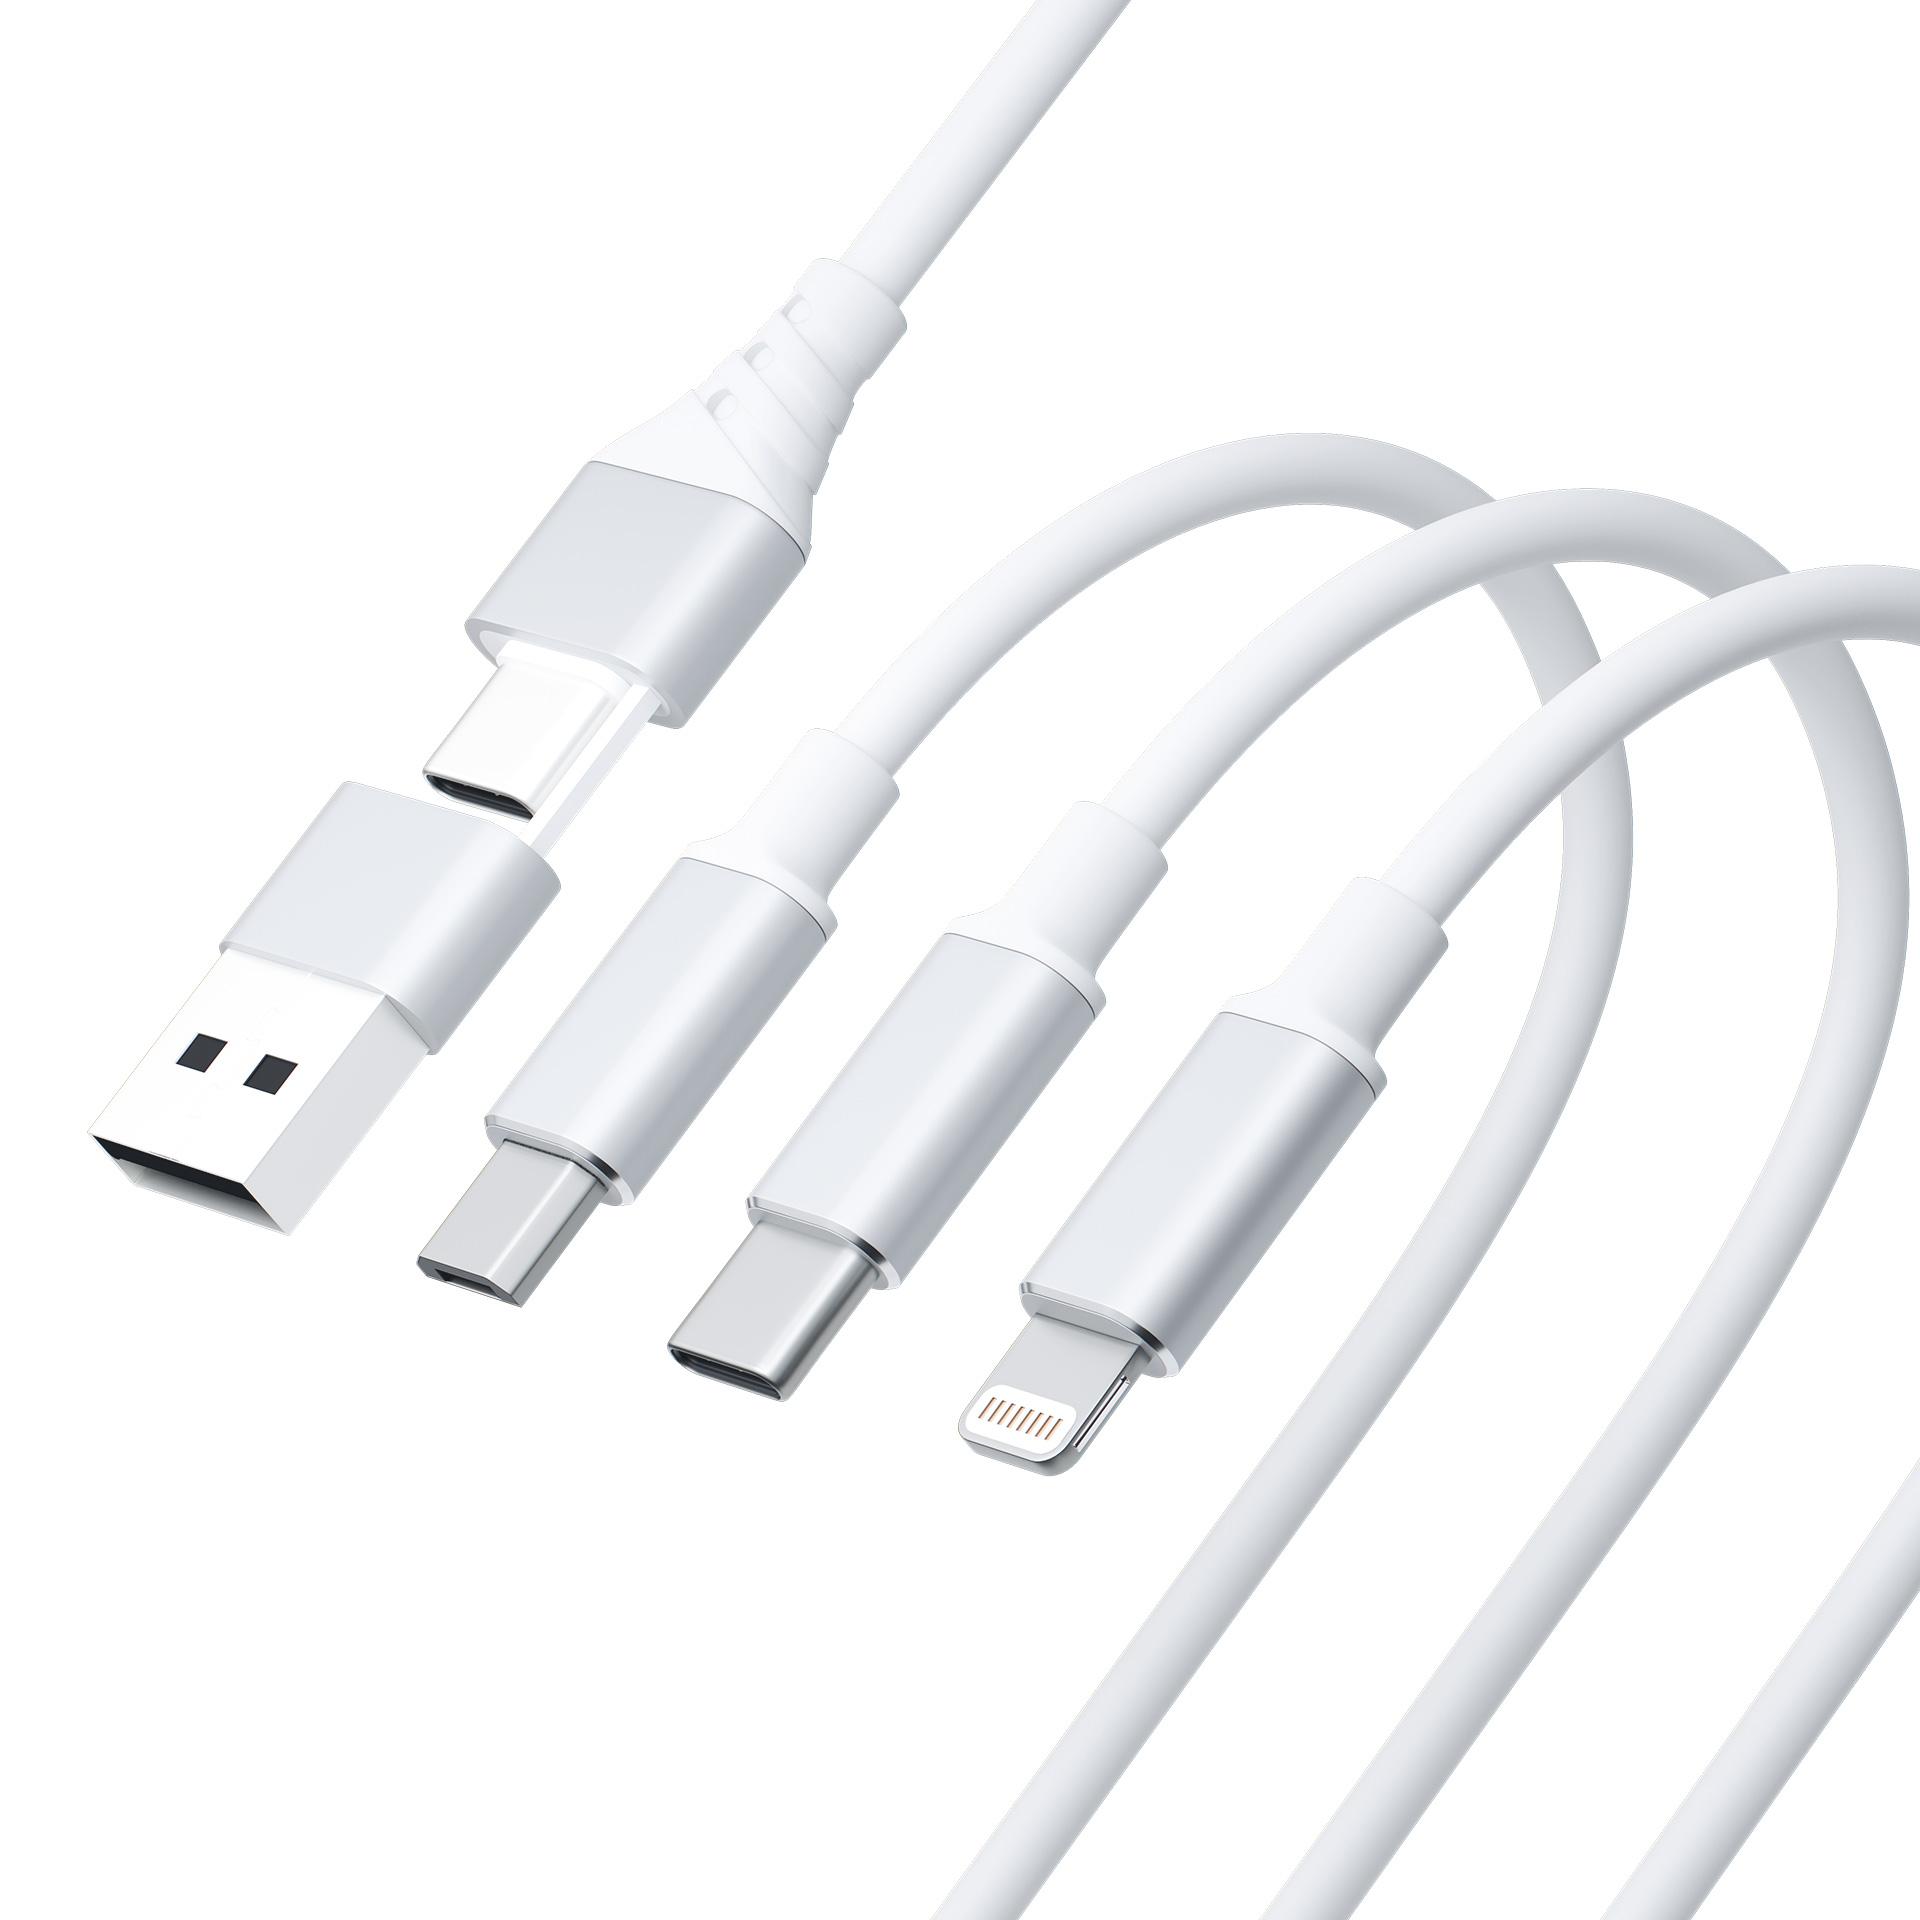 3mk Kabel Hyper Cable 3w1 USB-A / USB-C do MicroUSB / USB-C / Lightning 1.5m biały